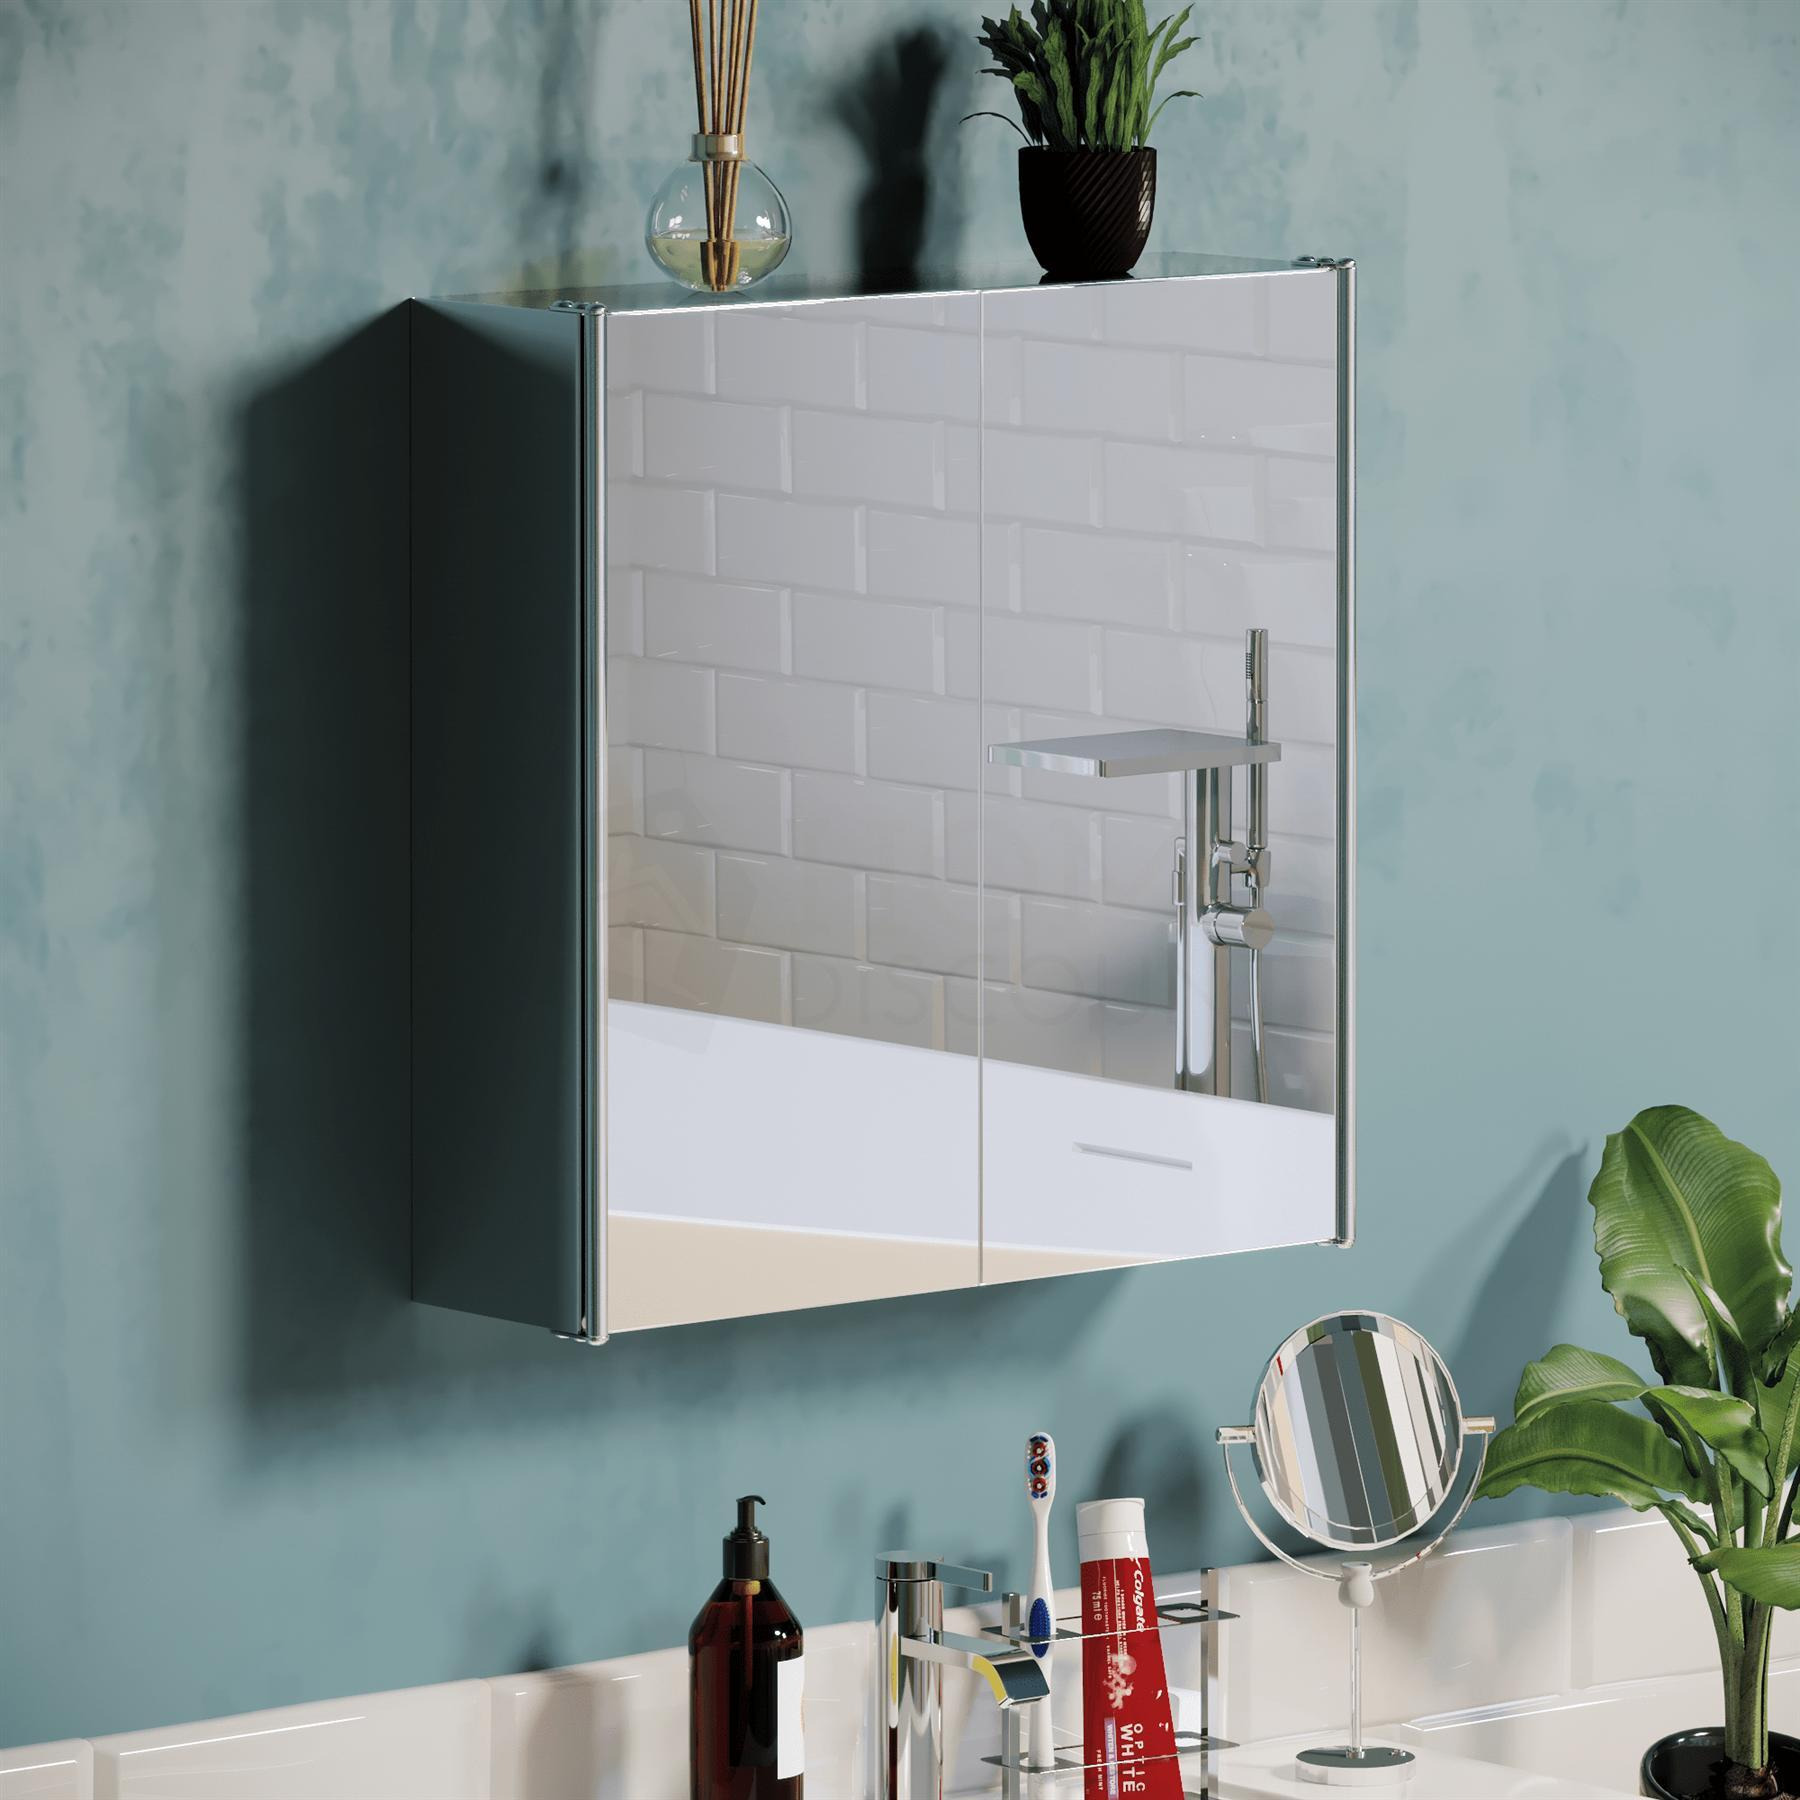 Bath Vida Tiano Stainless Steel Mirrored Double Door Wall Cabinet - image 1